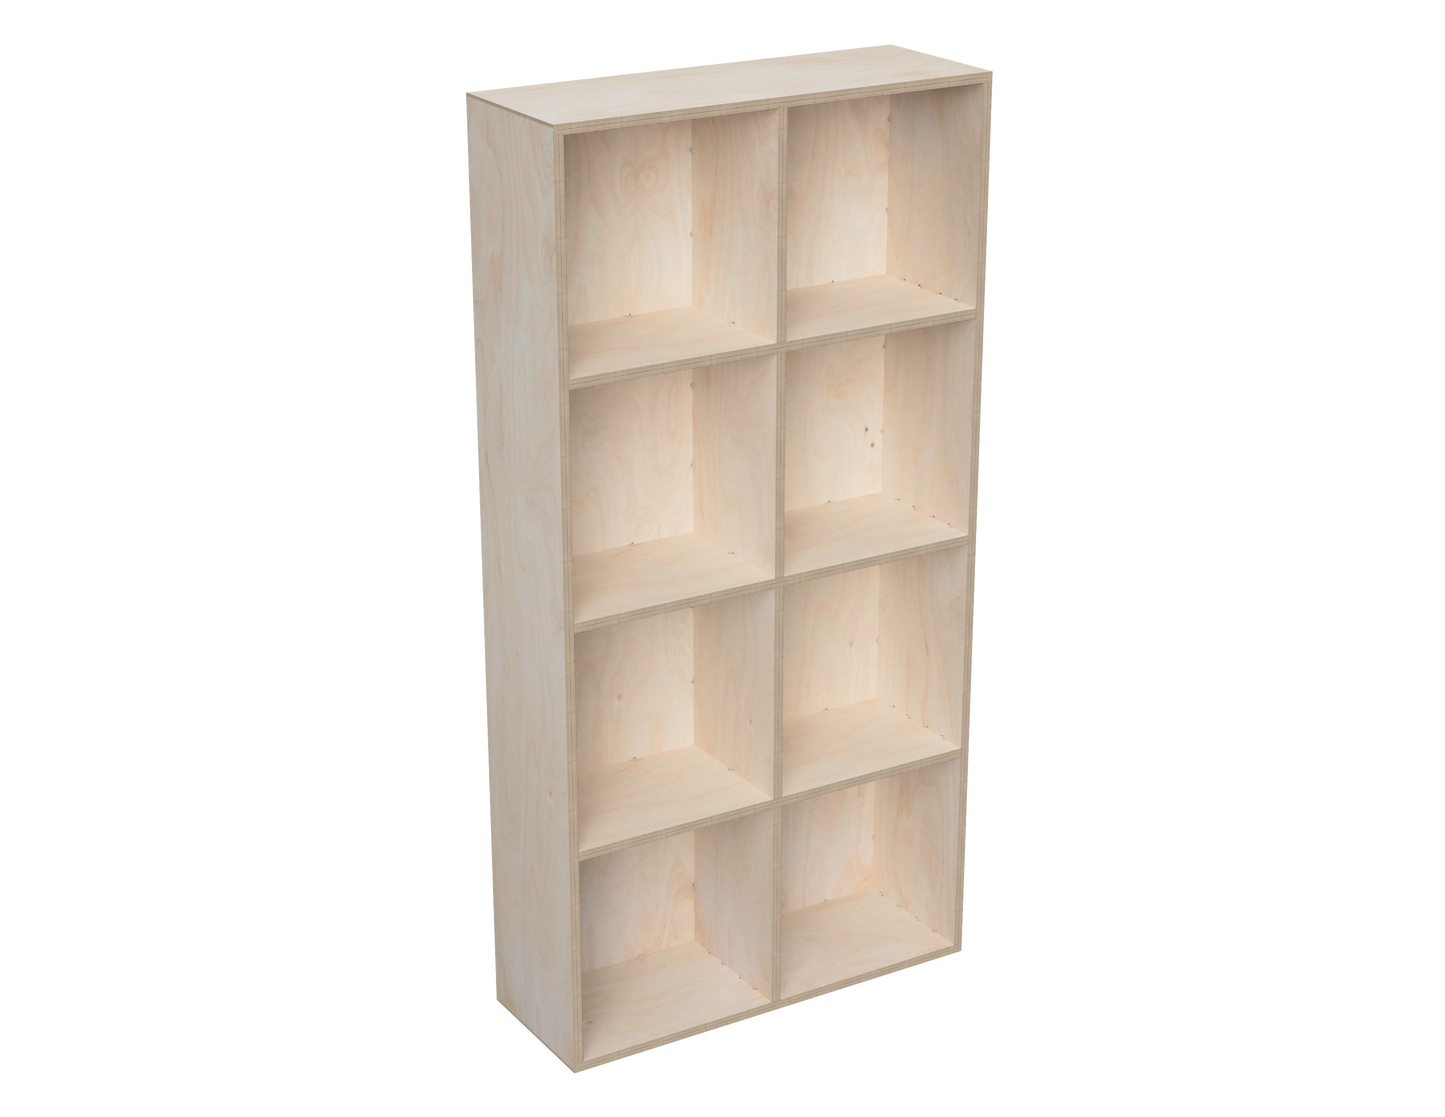 Wall Shelf - 4 x 2 Cubes DXF Files